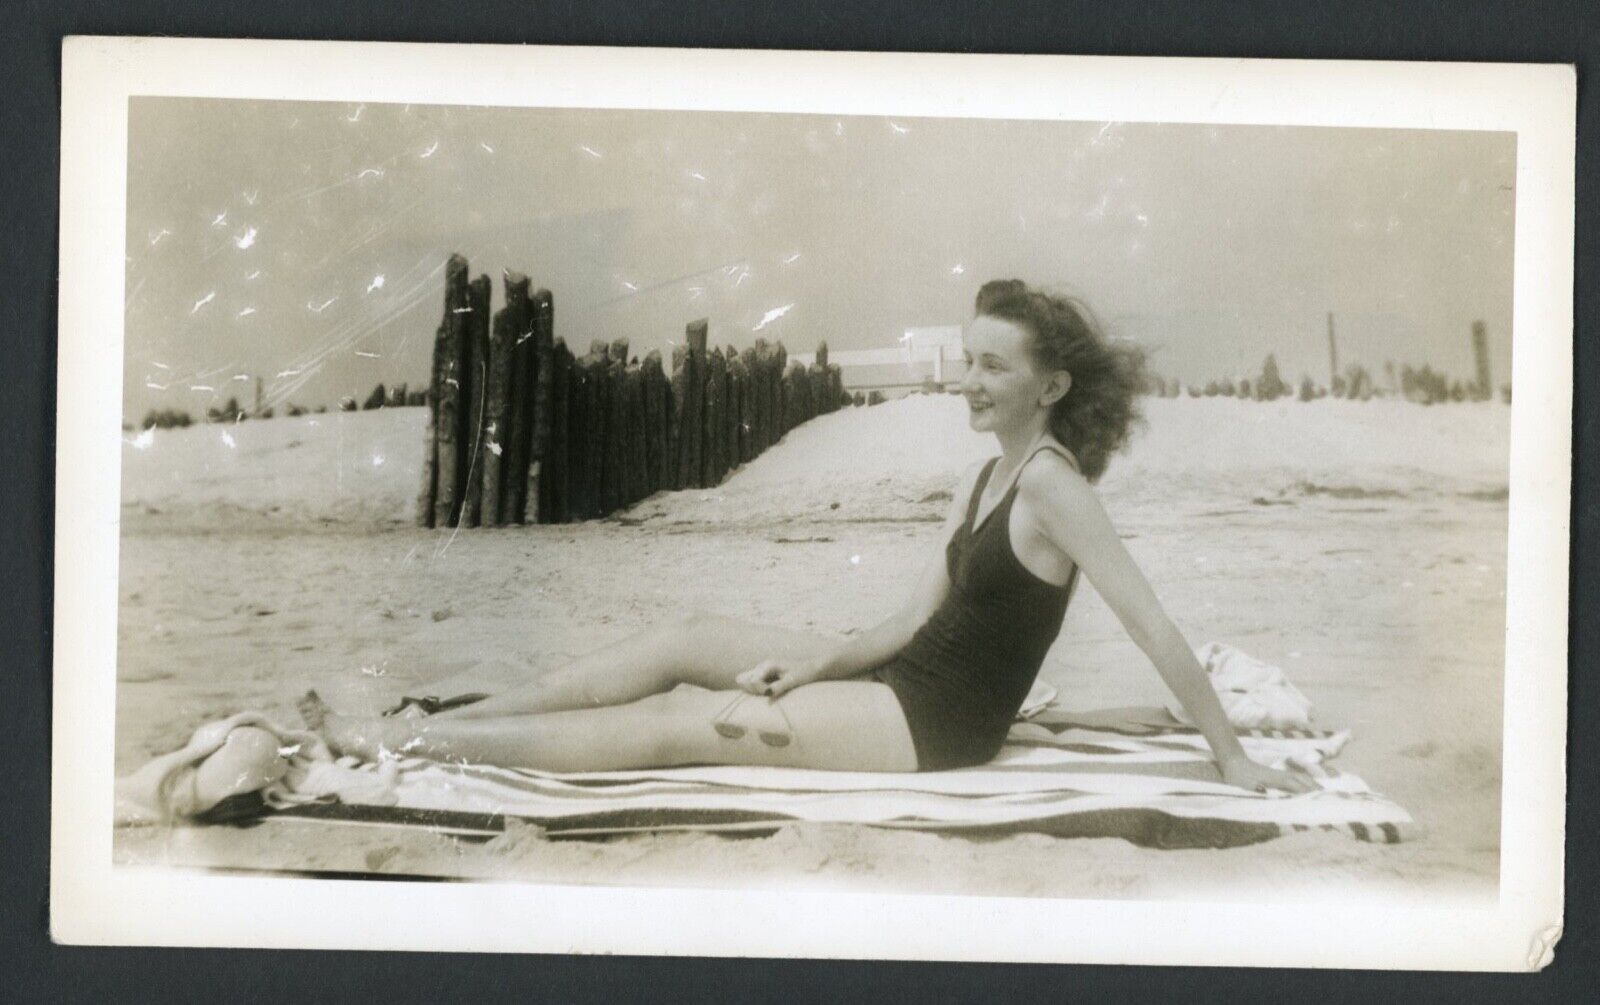 Leggy Swimsuit Woman Sunbathes on Windy Beach Photo 1940s Summer Legs Toes